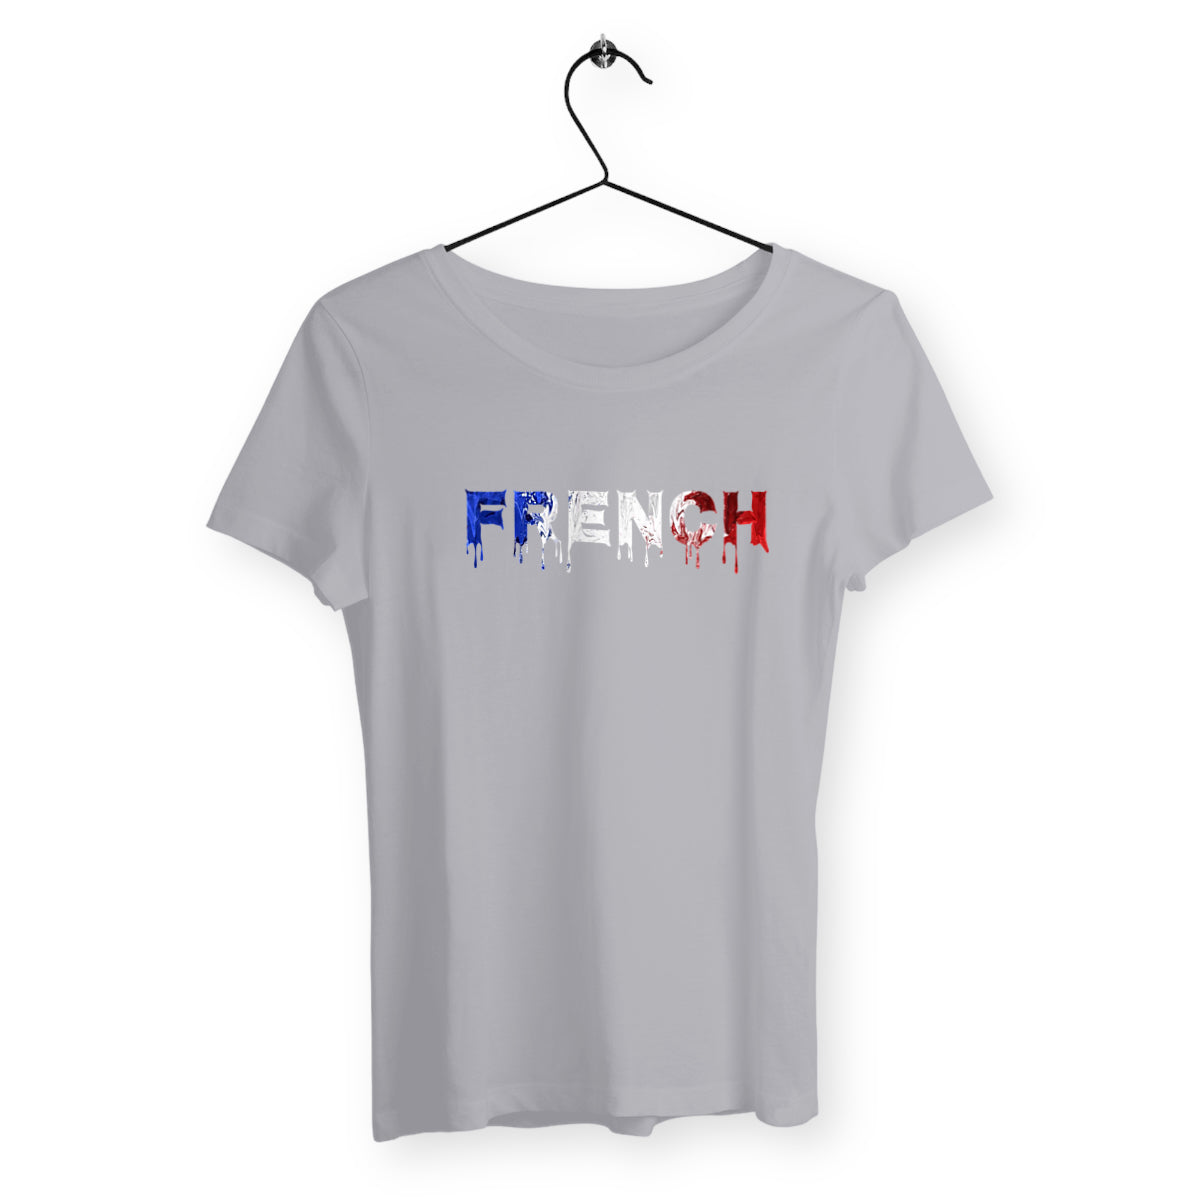 T-Shirt Femme Bio - Peinture French, t-shirt femme coton bio noir peinture french T-French, t-shirt french, t-shirt french touch femme, tee shirt french peinture gris